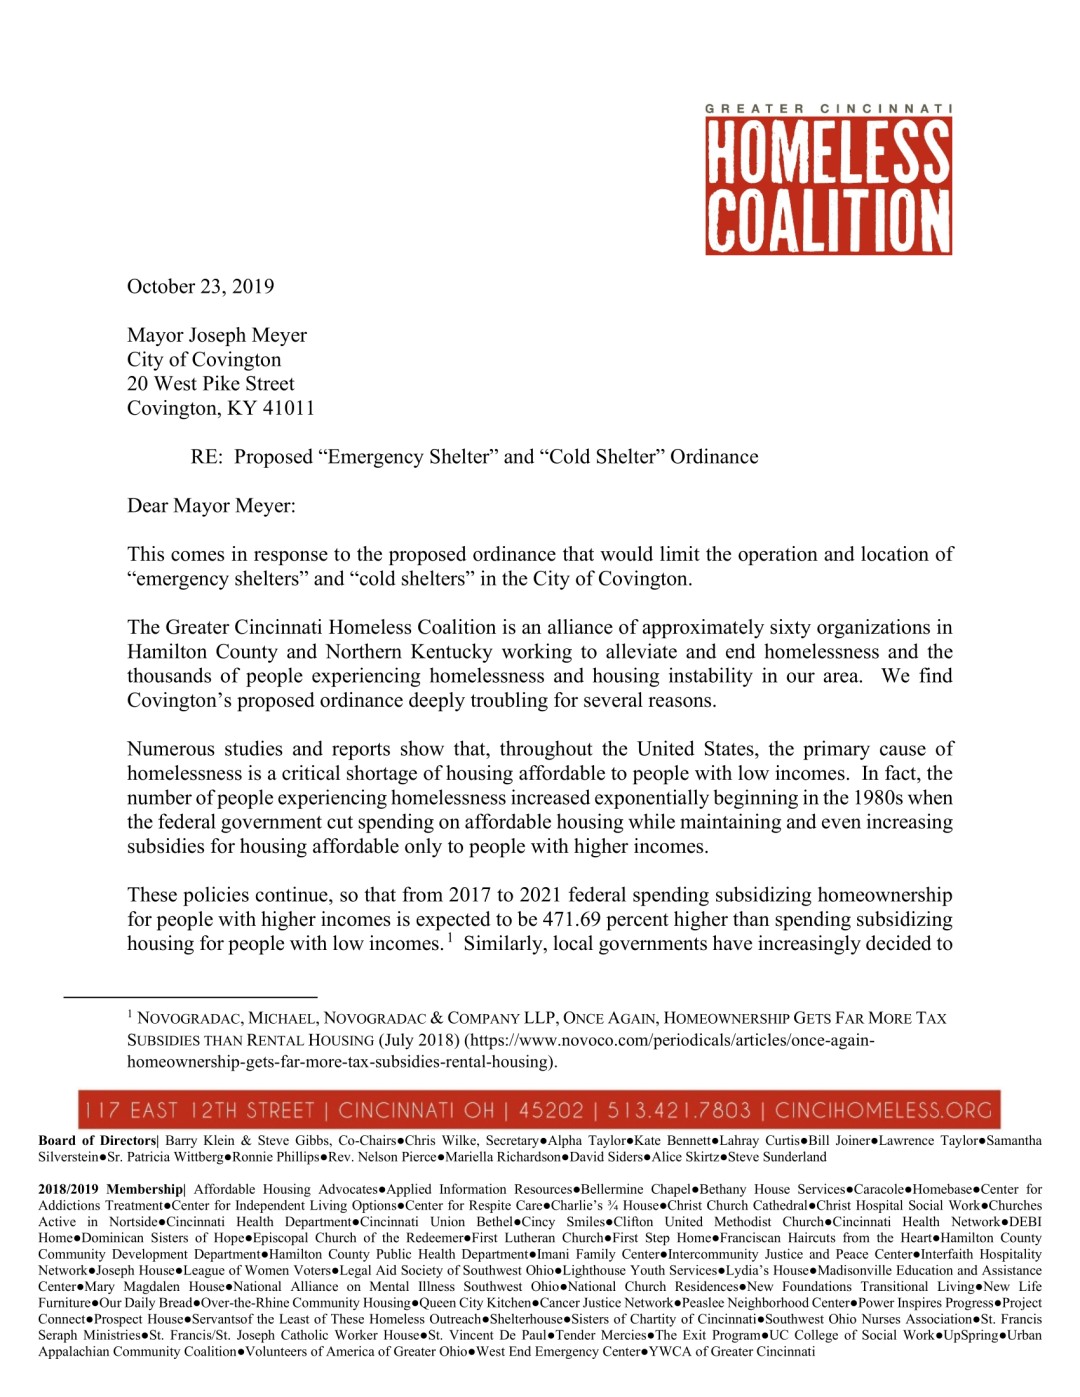 Letter_to_Covington_Mayor_Meyer_RE_Shelter_Draft_Ordinance-1[1]